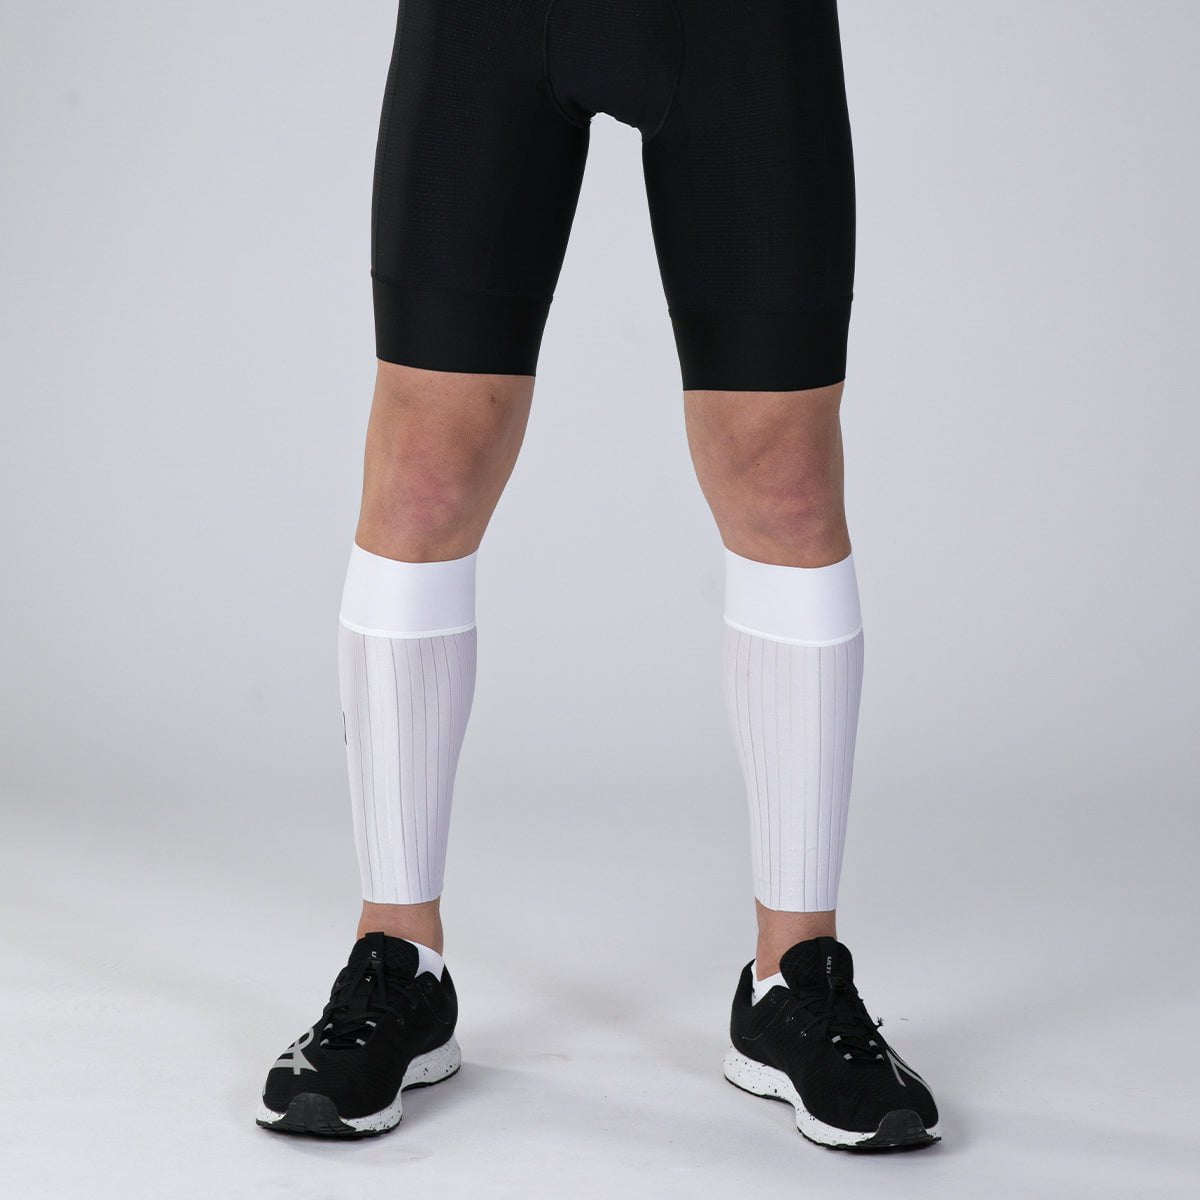 Leg Sleeves Football Calf Compression Sleeves for Men Boys Women (Black,  White